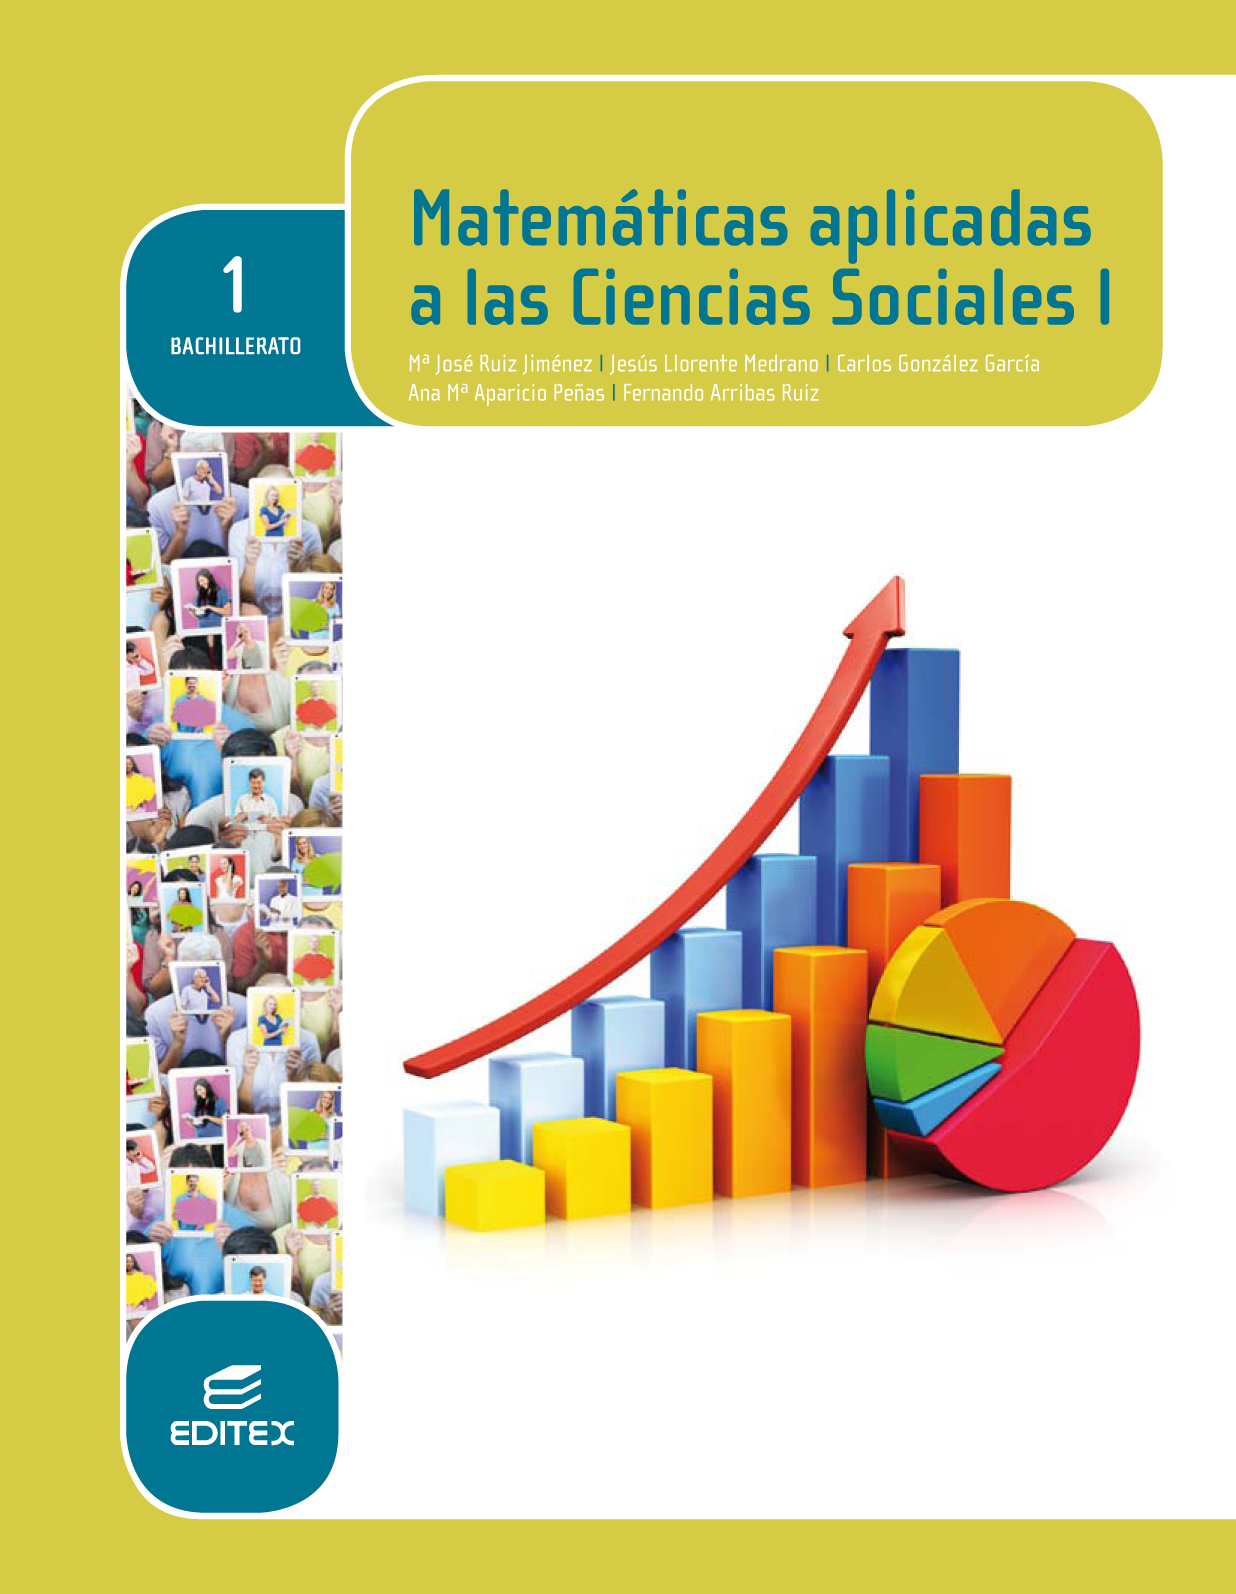 Matemáticas aplicadas a las Ciencias Sociales I 1º Bachillerato (LOMCE)